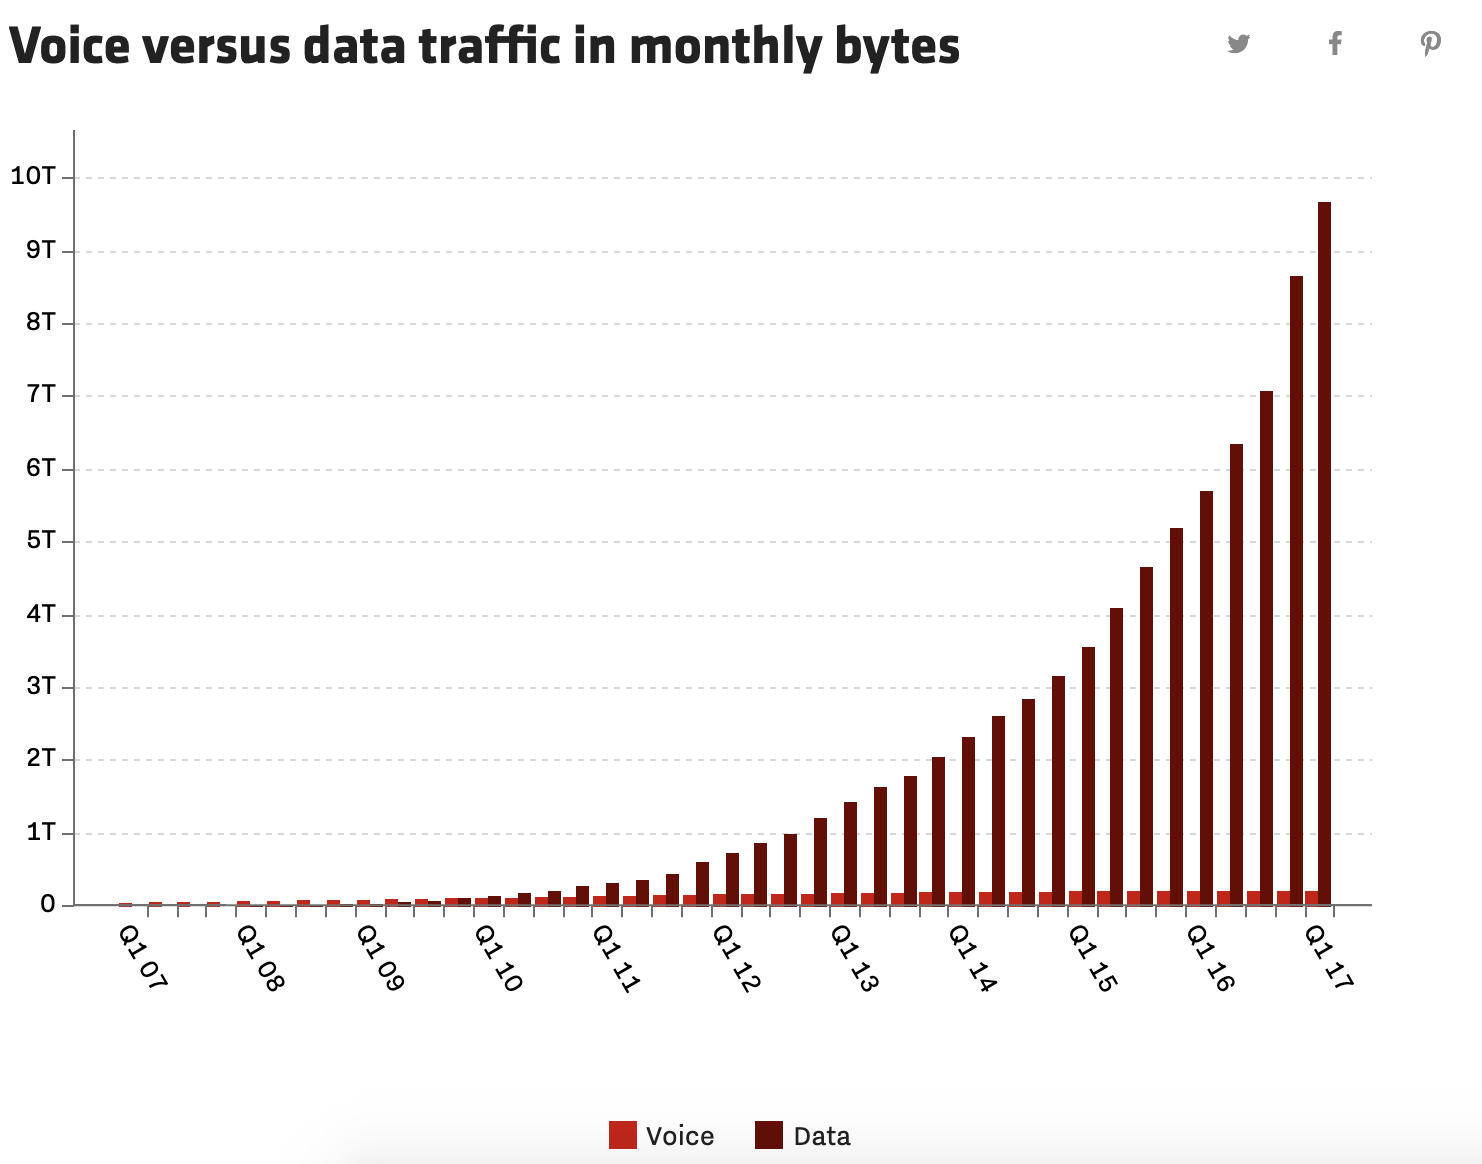 Voice versus data traffic in monthly bytes.